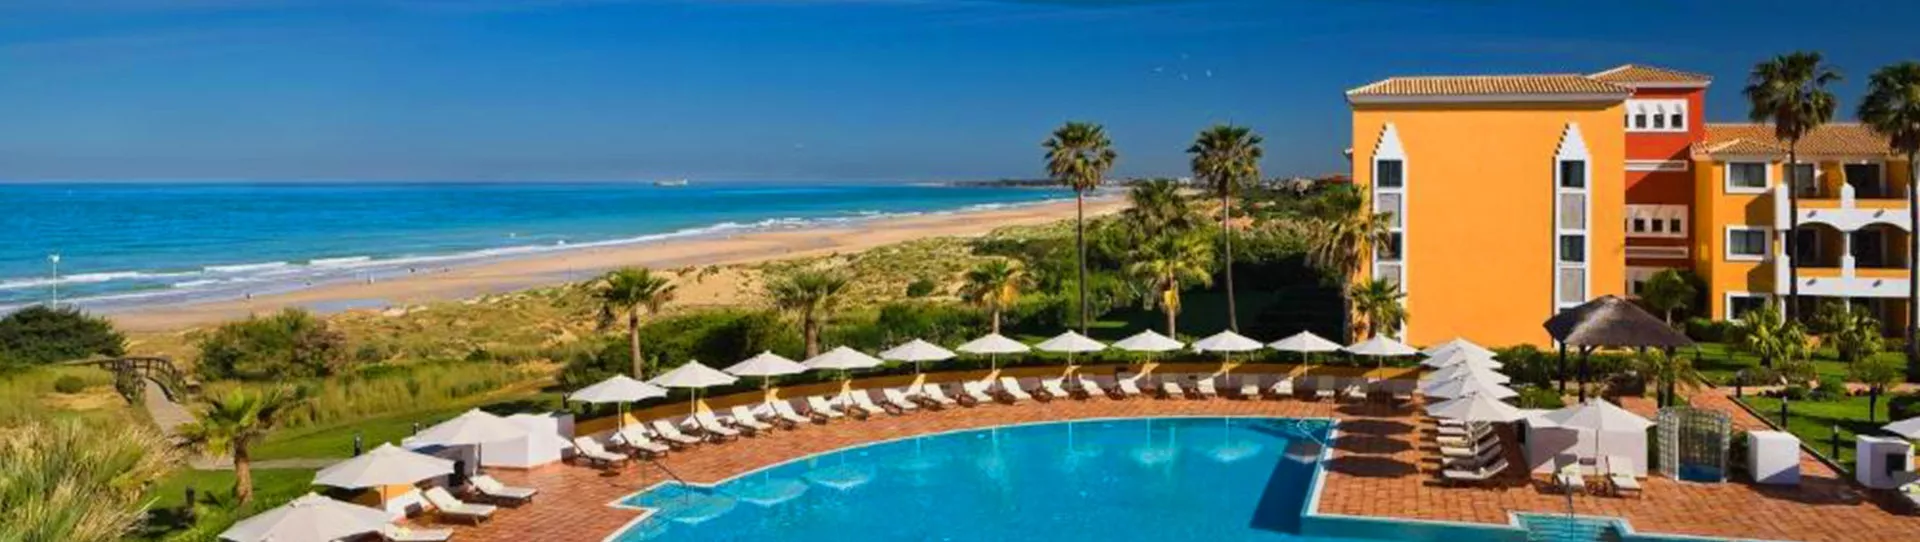 Spain golf holidays - Melia Sancti Petri Hotel 5* - Photo 1